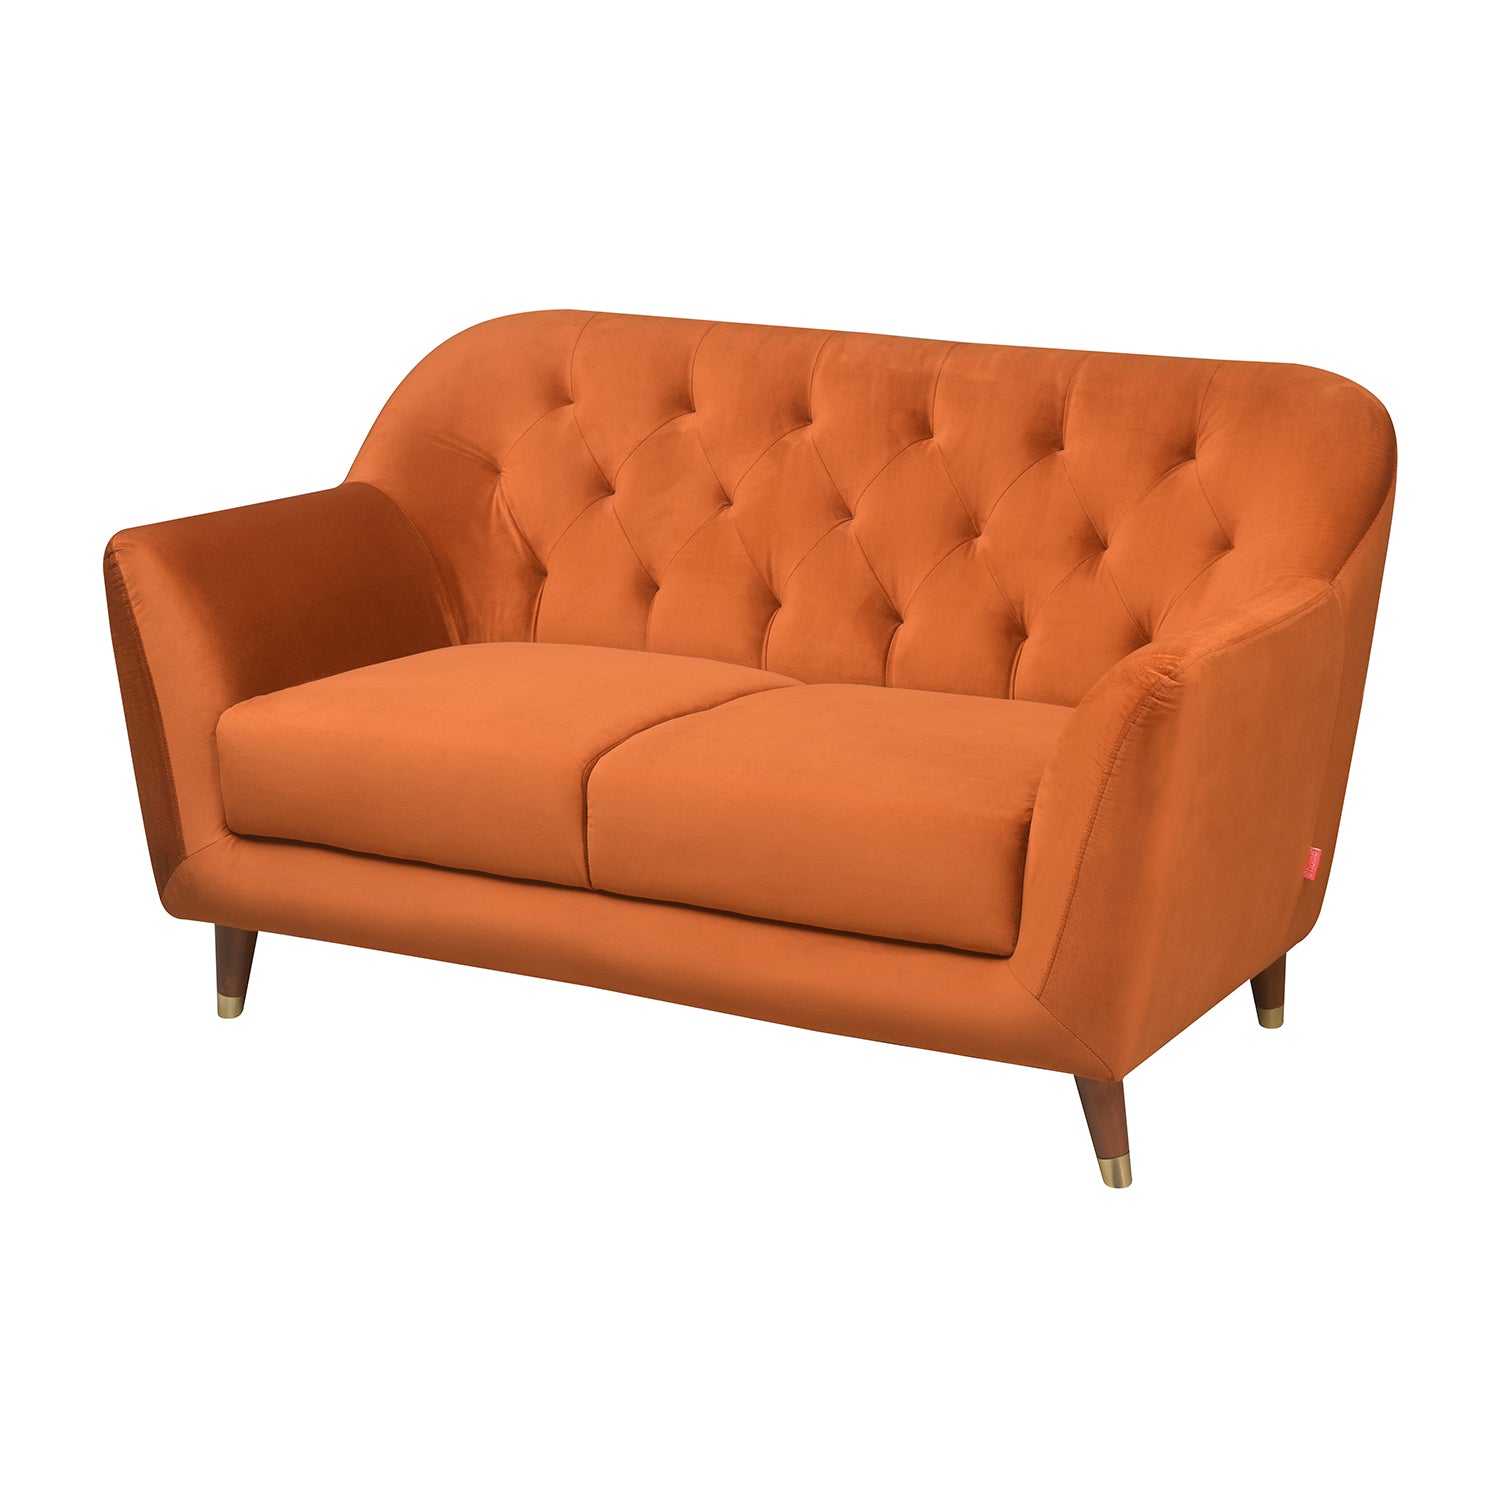 Jennifer 2 Seater Sofa (Rust)